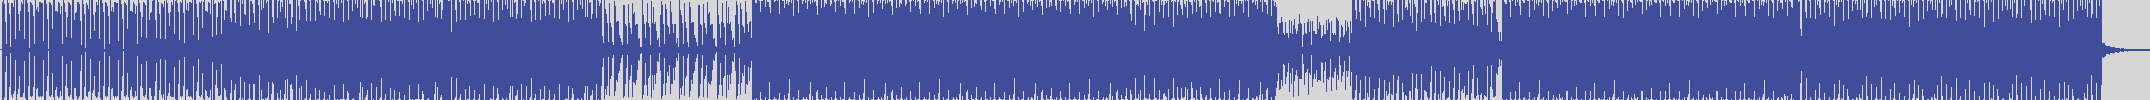 nf_boyz_records [NFY051] Qbik 77 - Space Travel [Solution Mix] audio wave form